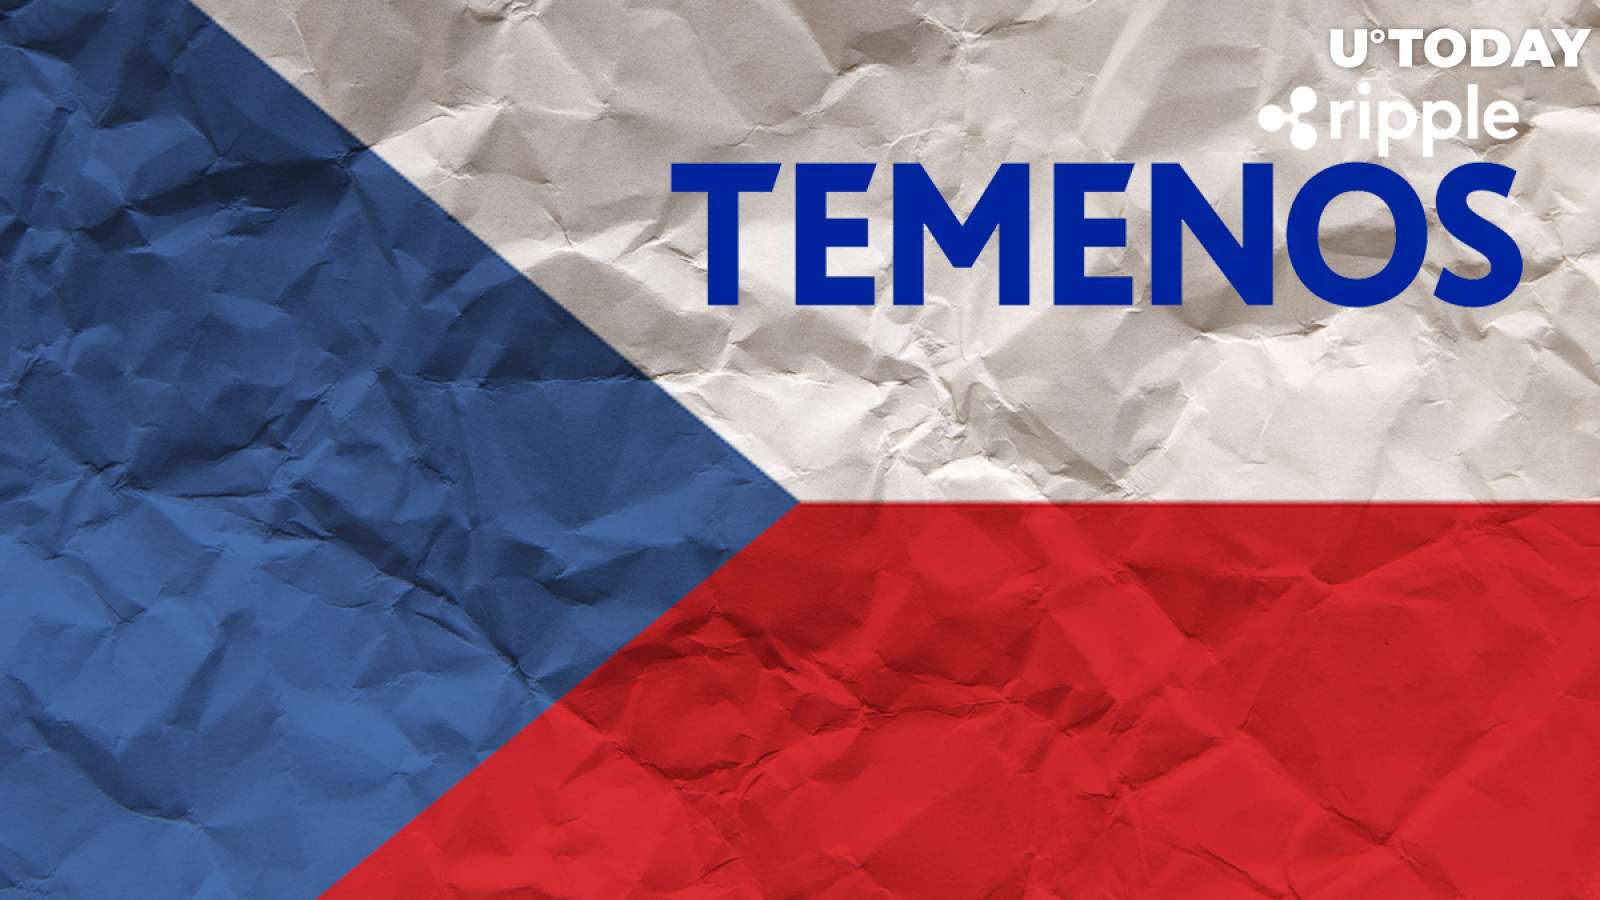 Ripple-Friendly Temenos Picked by Société Générale Group to Modernize Major Bank in Czech Republic